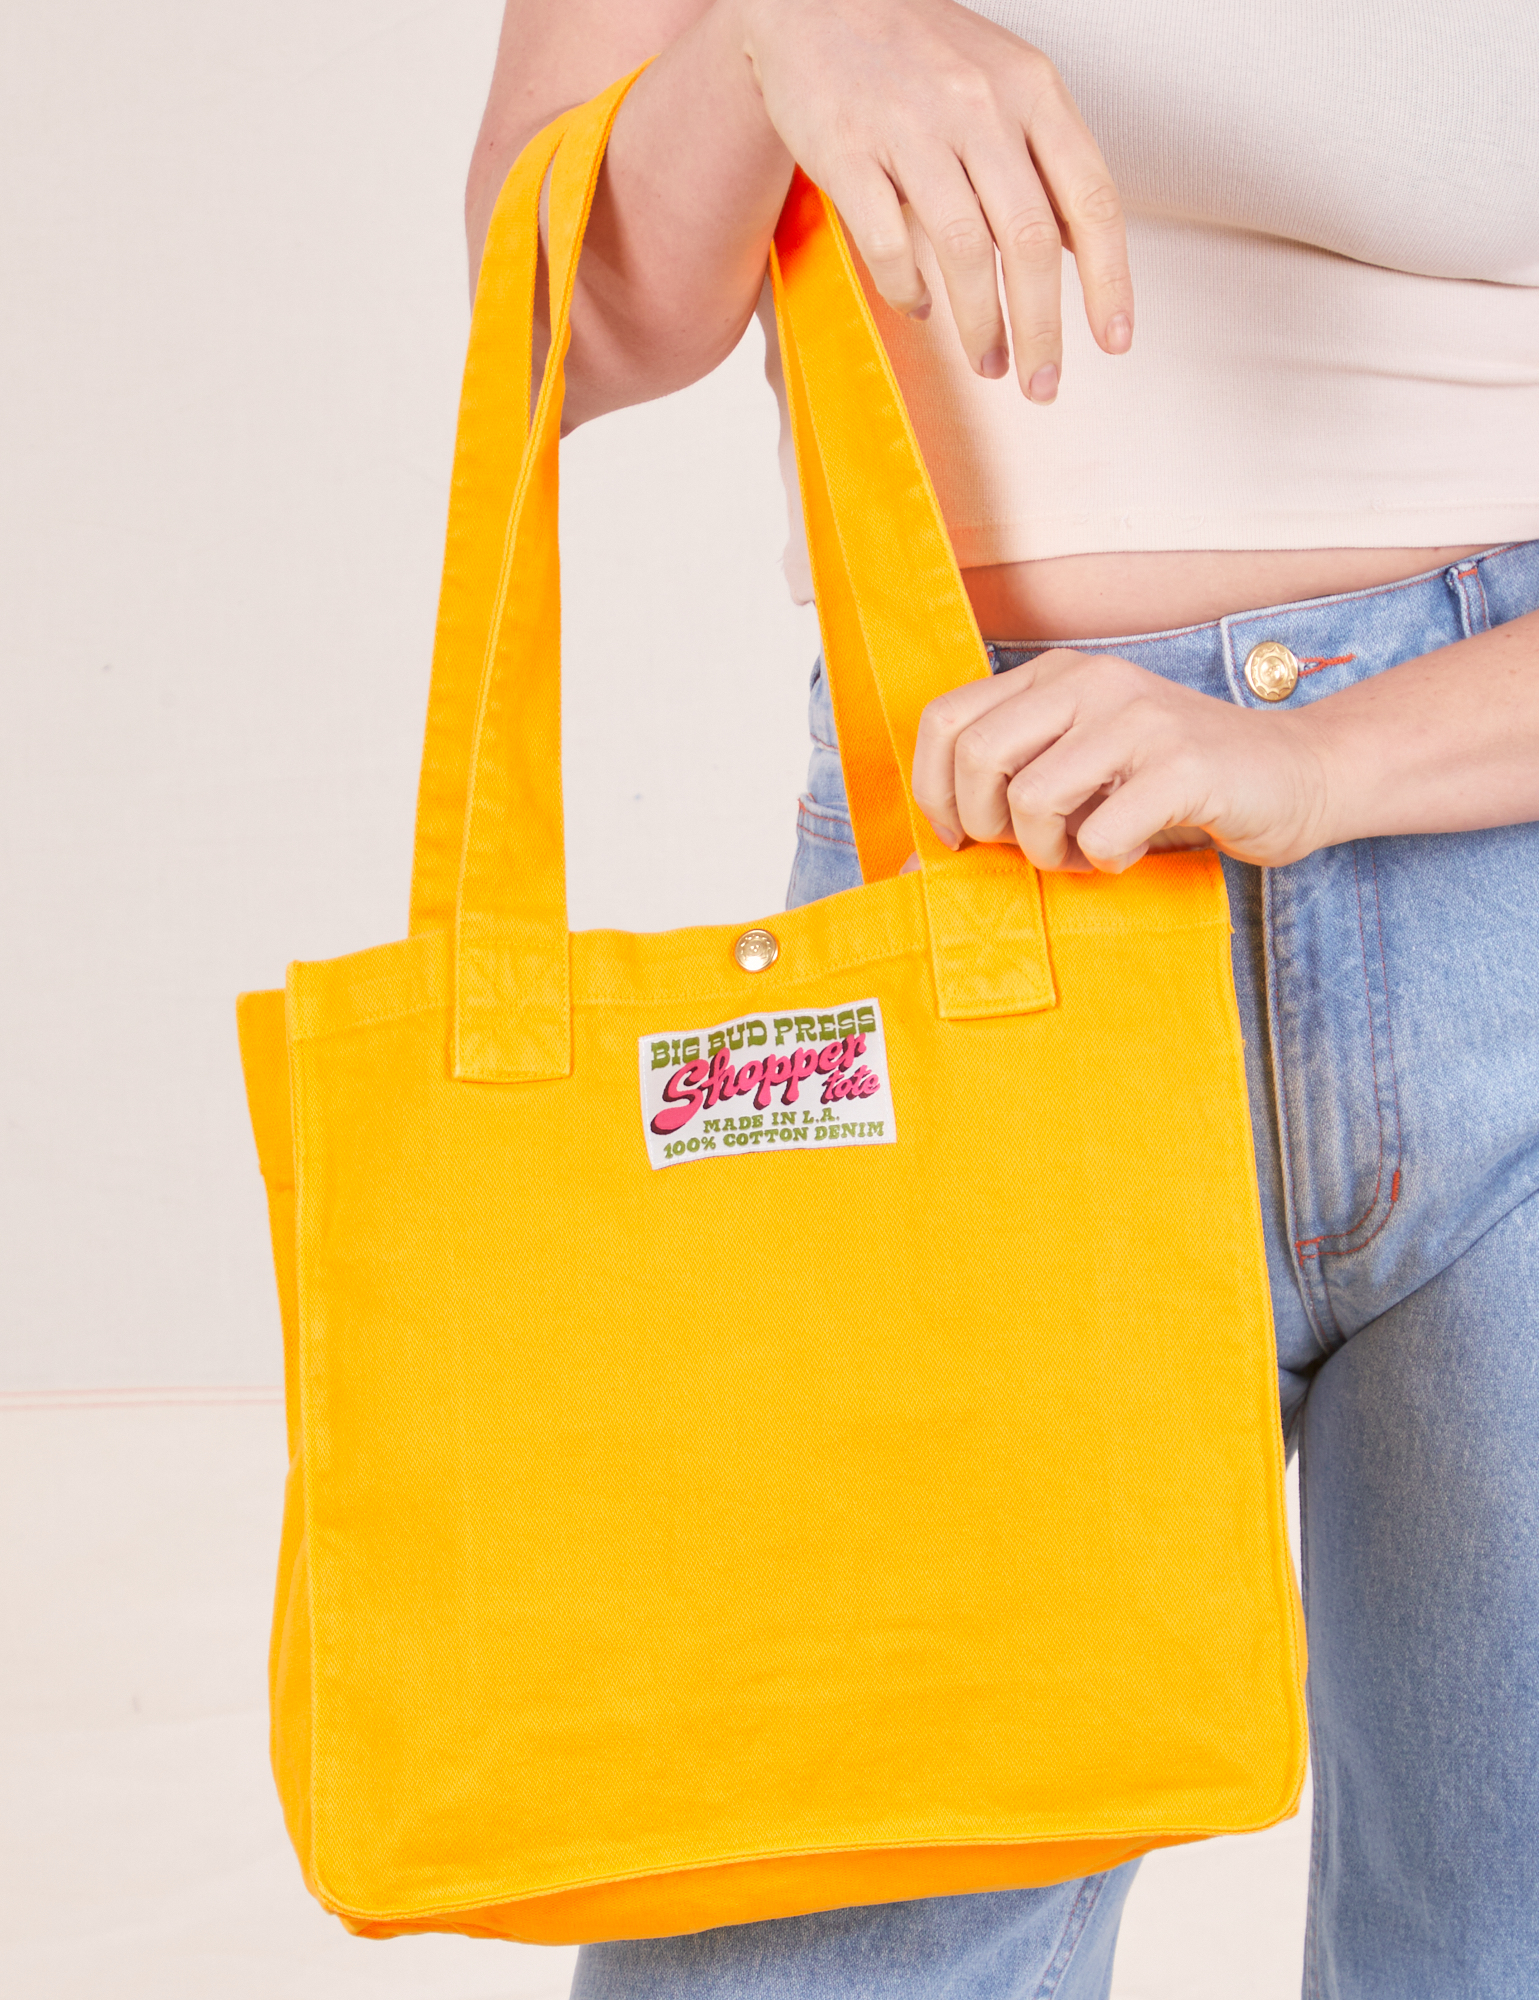 Everyday Tote Bag – BIG BUD PRESS